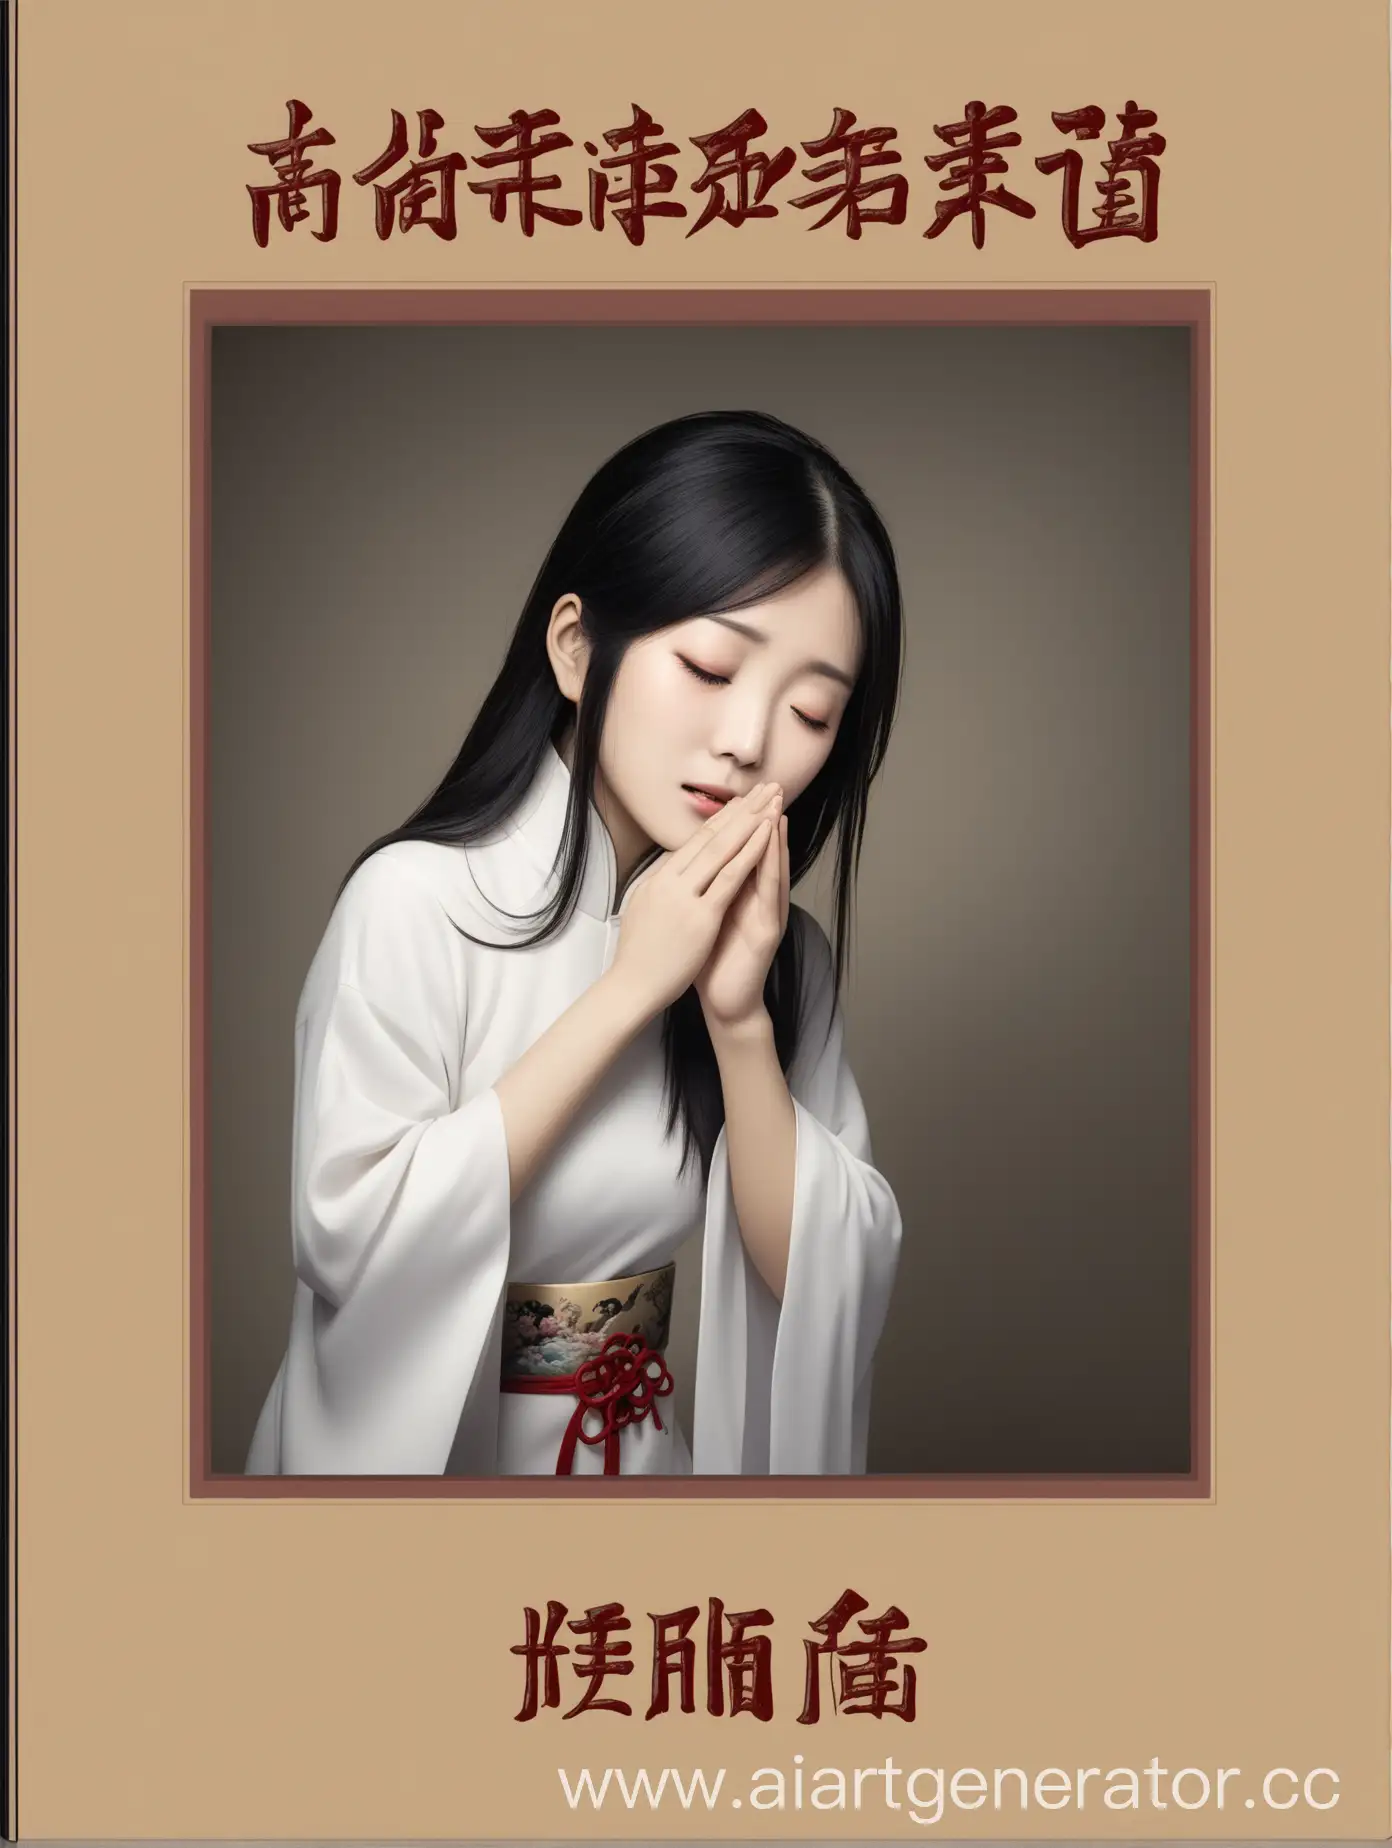 Chinese-Woman-Seeking-Forgiveness-in-Album-Layout